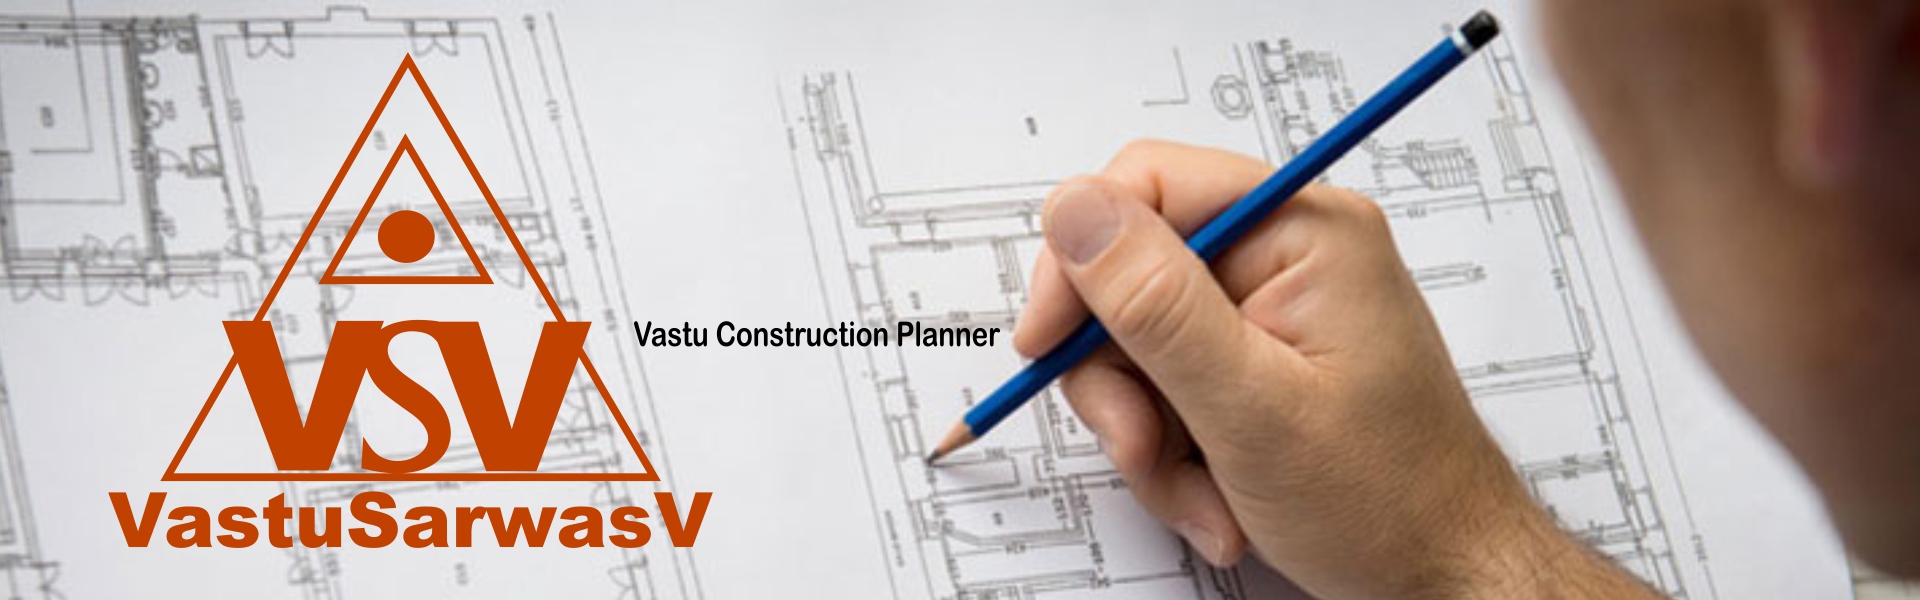 Best Vastu Construction Planner Near Me - Vastu Sarwasv